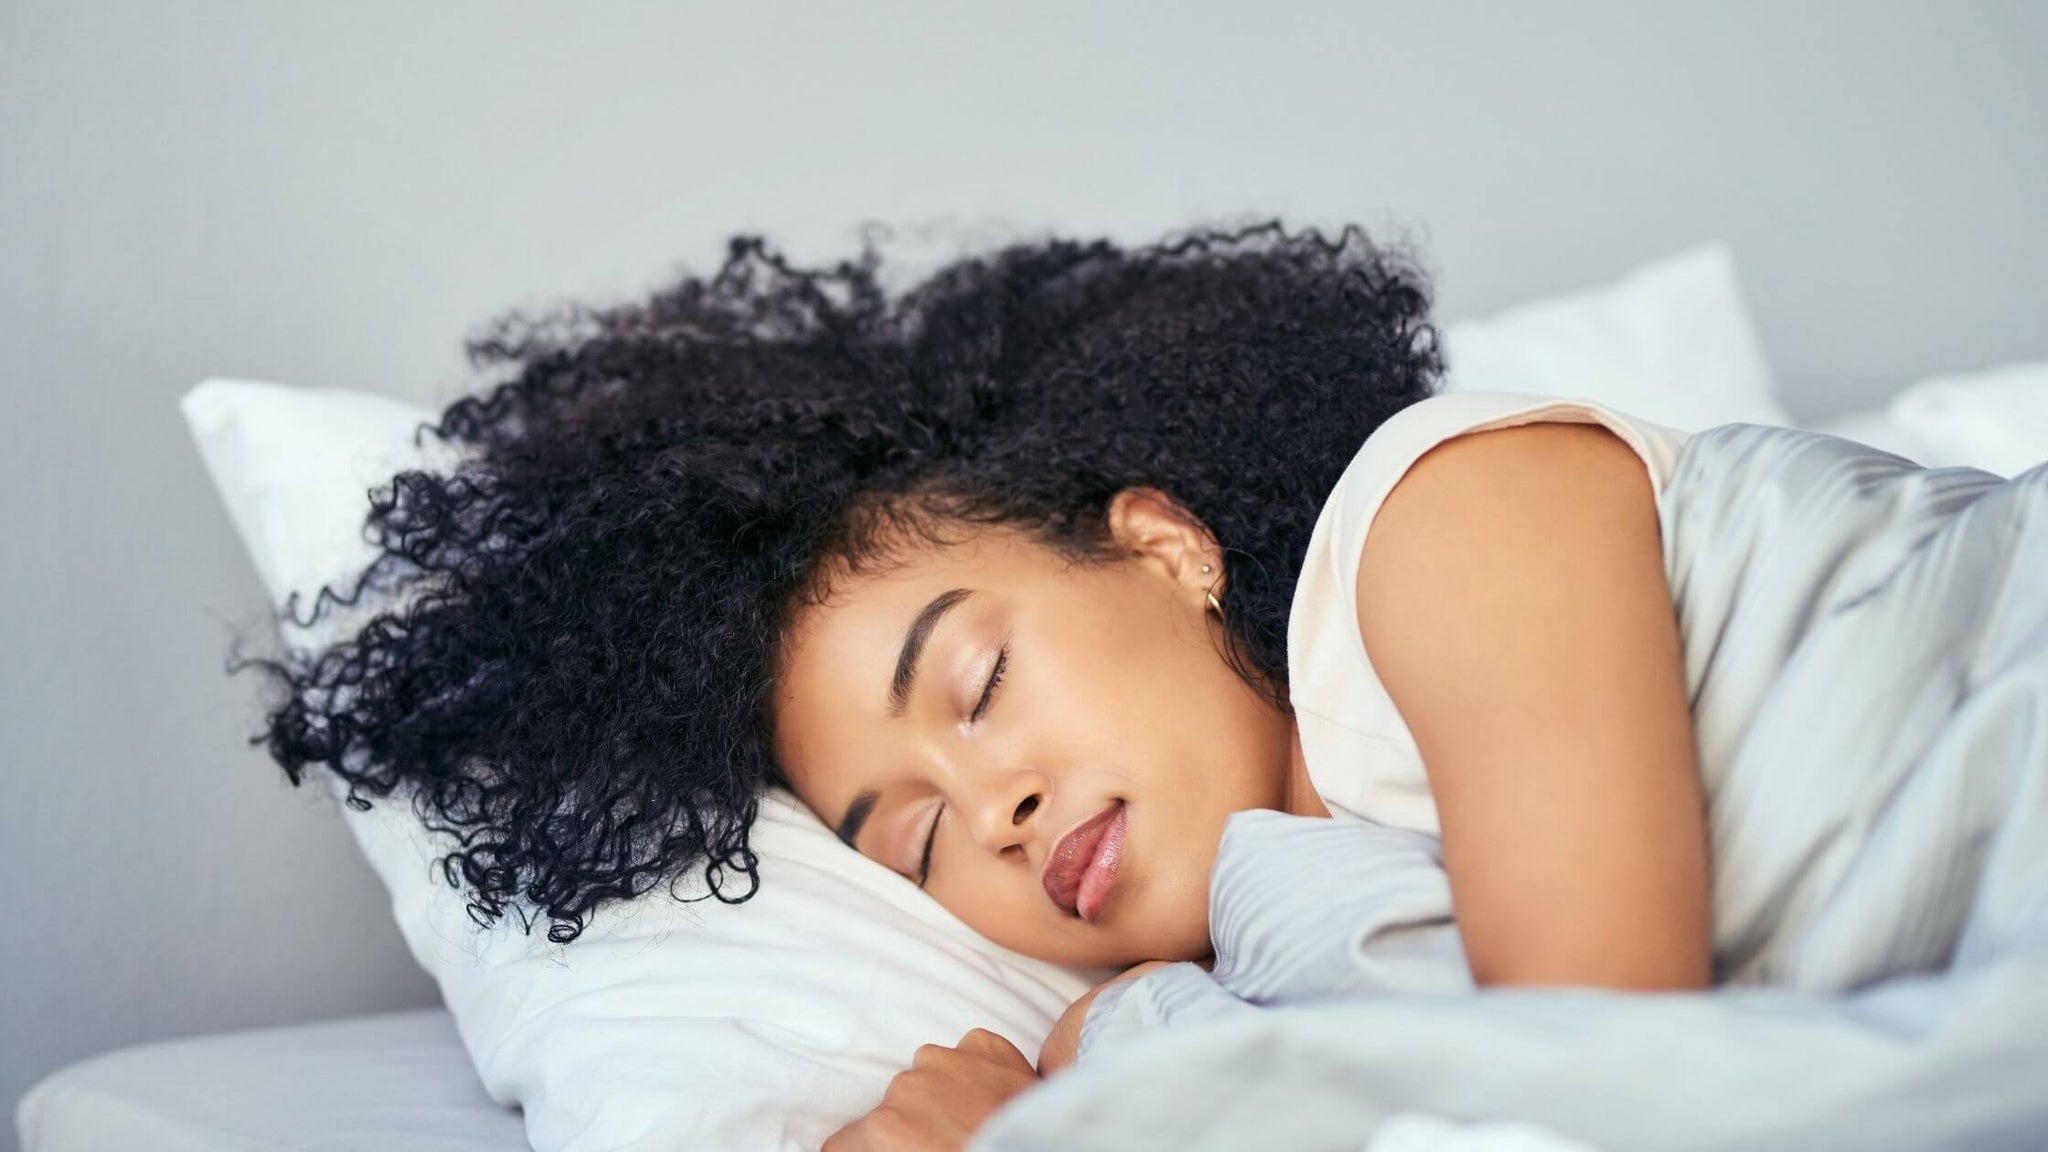 woman sleeping with steady blood sugar levels